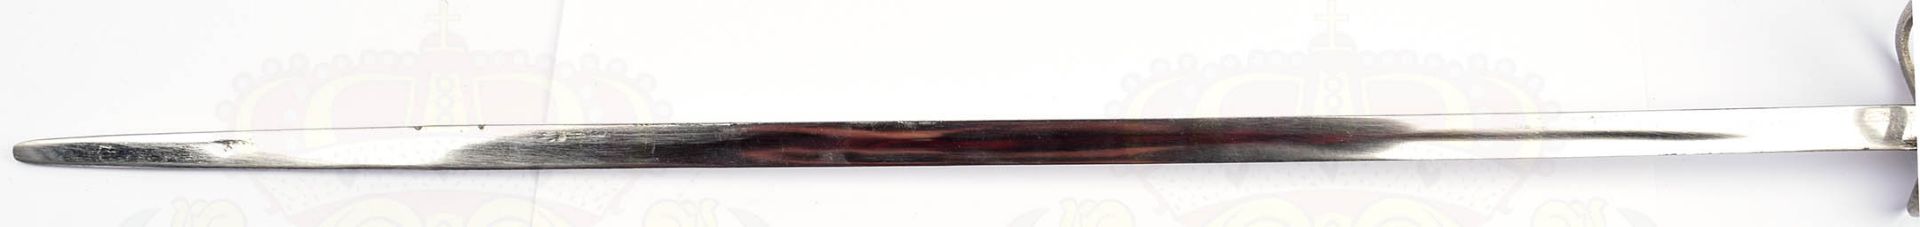 KINDER-KD 89, vernickelte Klinge m. runder Spitze, L. 51cm, gering schartig, starres Tombak- - Bild 2 aus 4